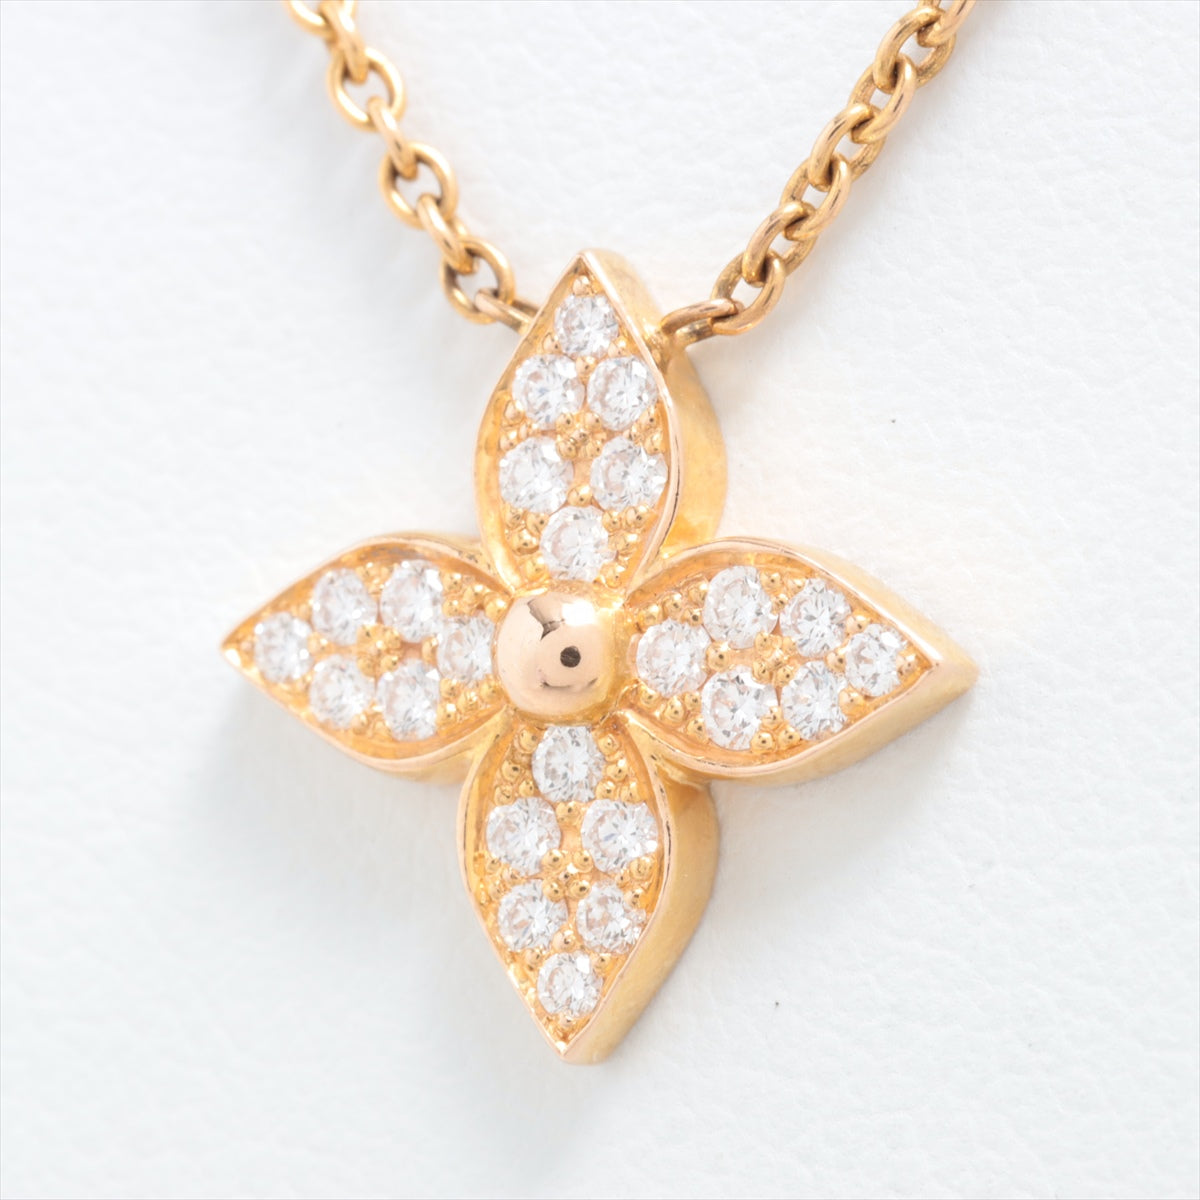 Louis Vuitton Pandantif Star Blossom Diamond Necklace 750(YG) 4.6g